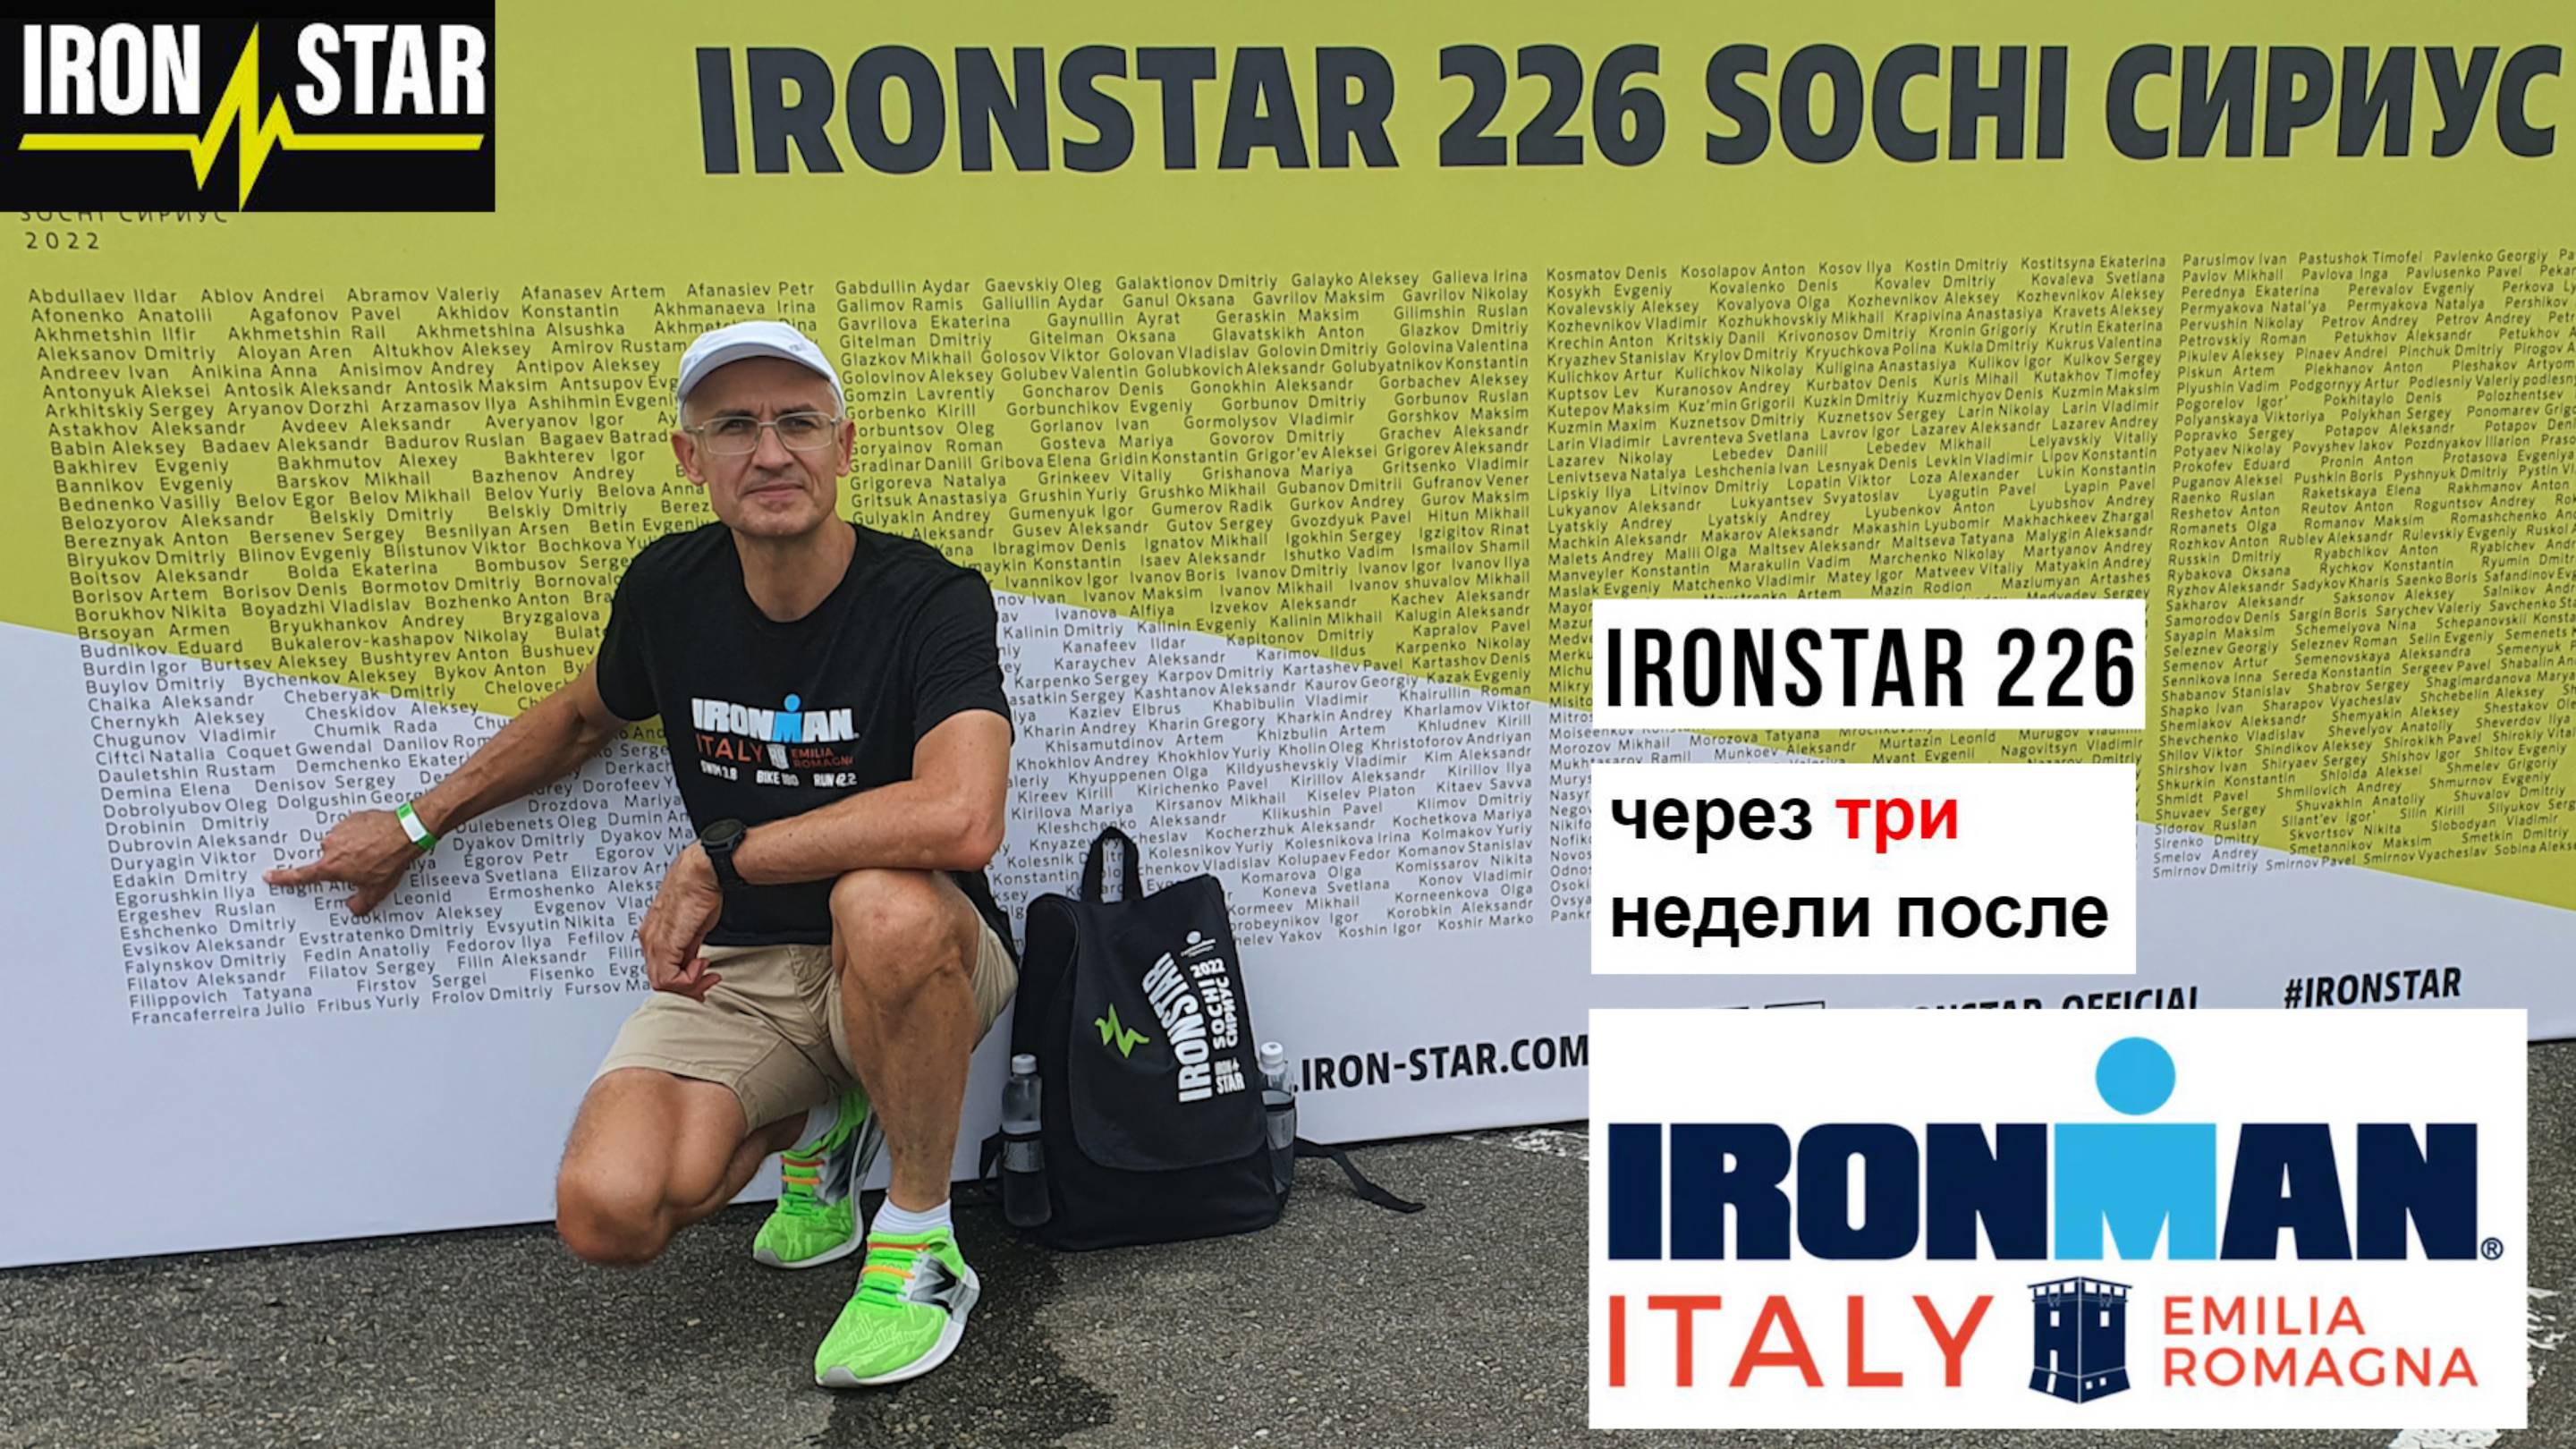 IronStar 226 через три недели после Ironman